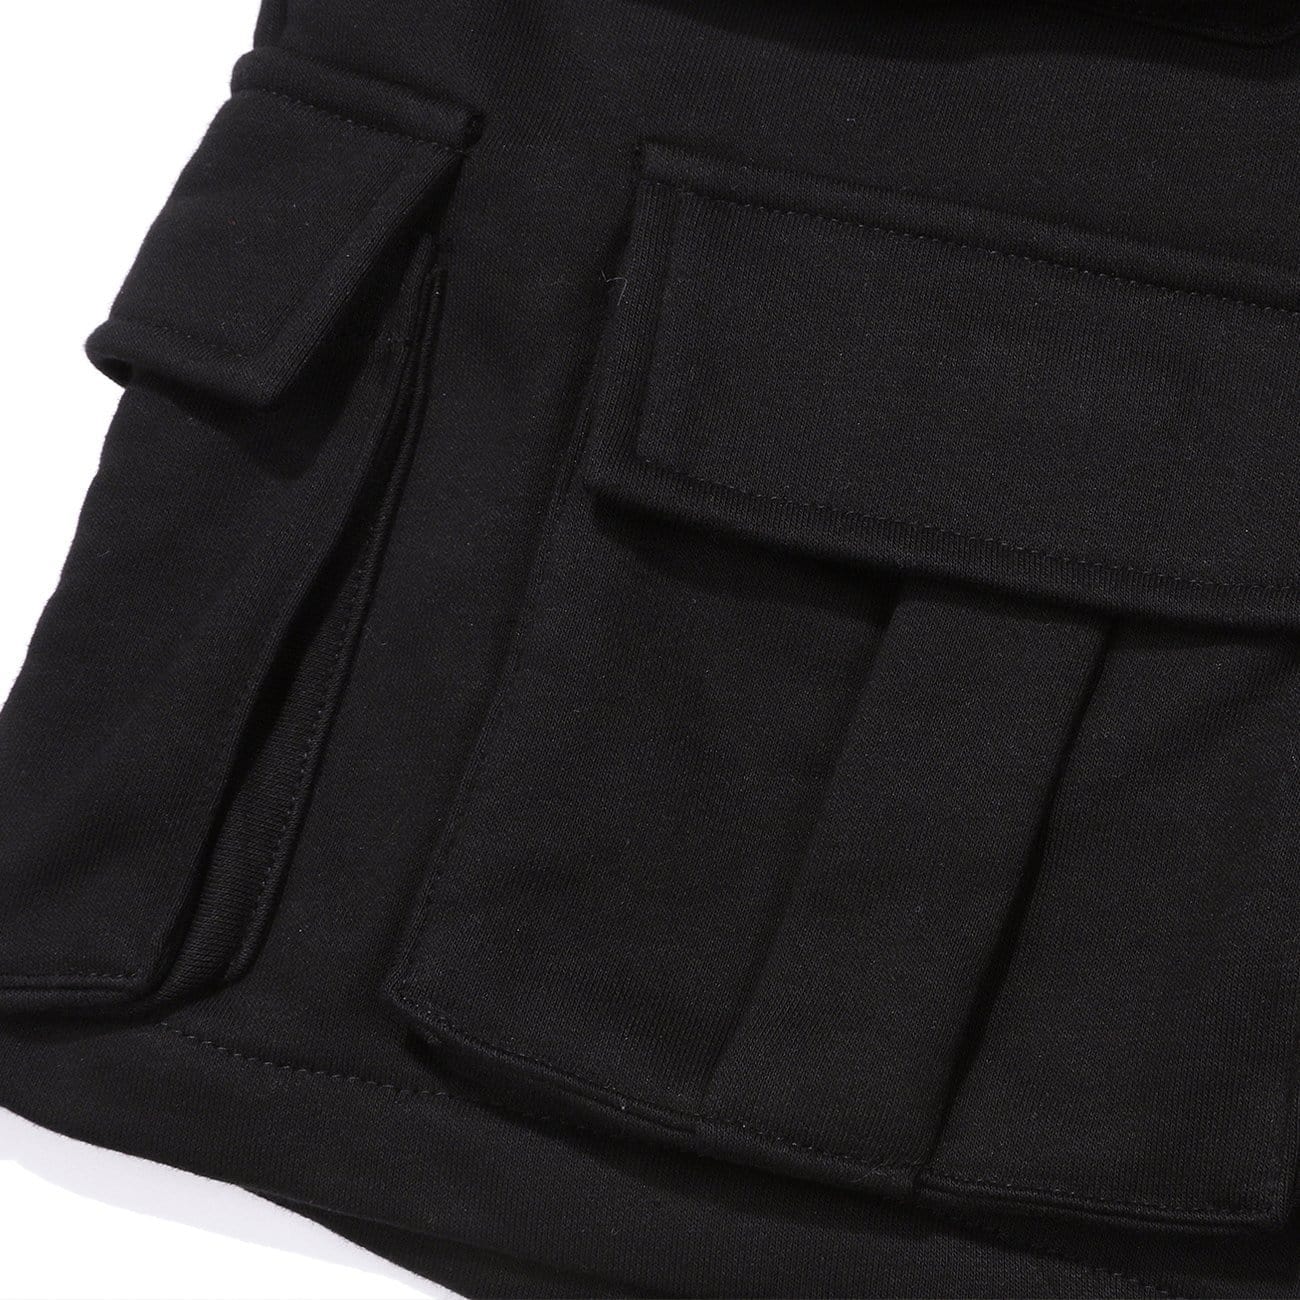 Buckle Pocket Cargo Shorts Streetwear Brand Techwear Combat Tactical YUGEN THEORY